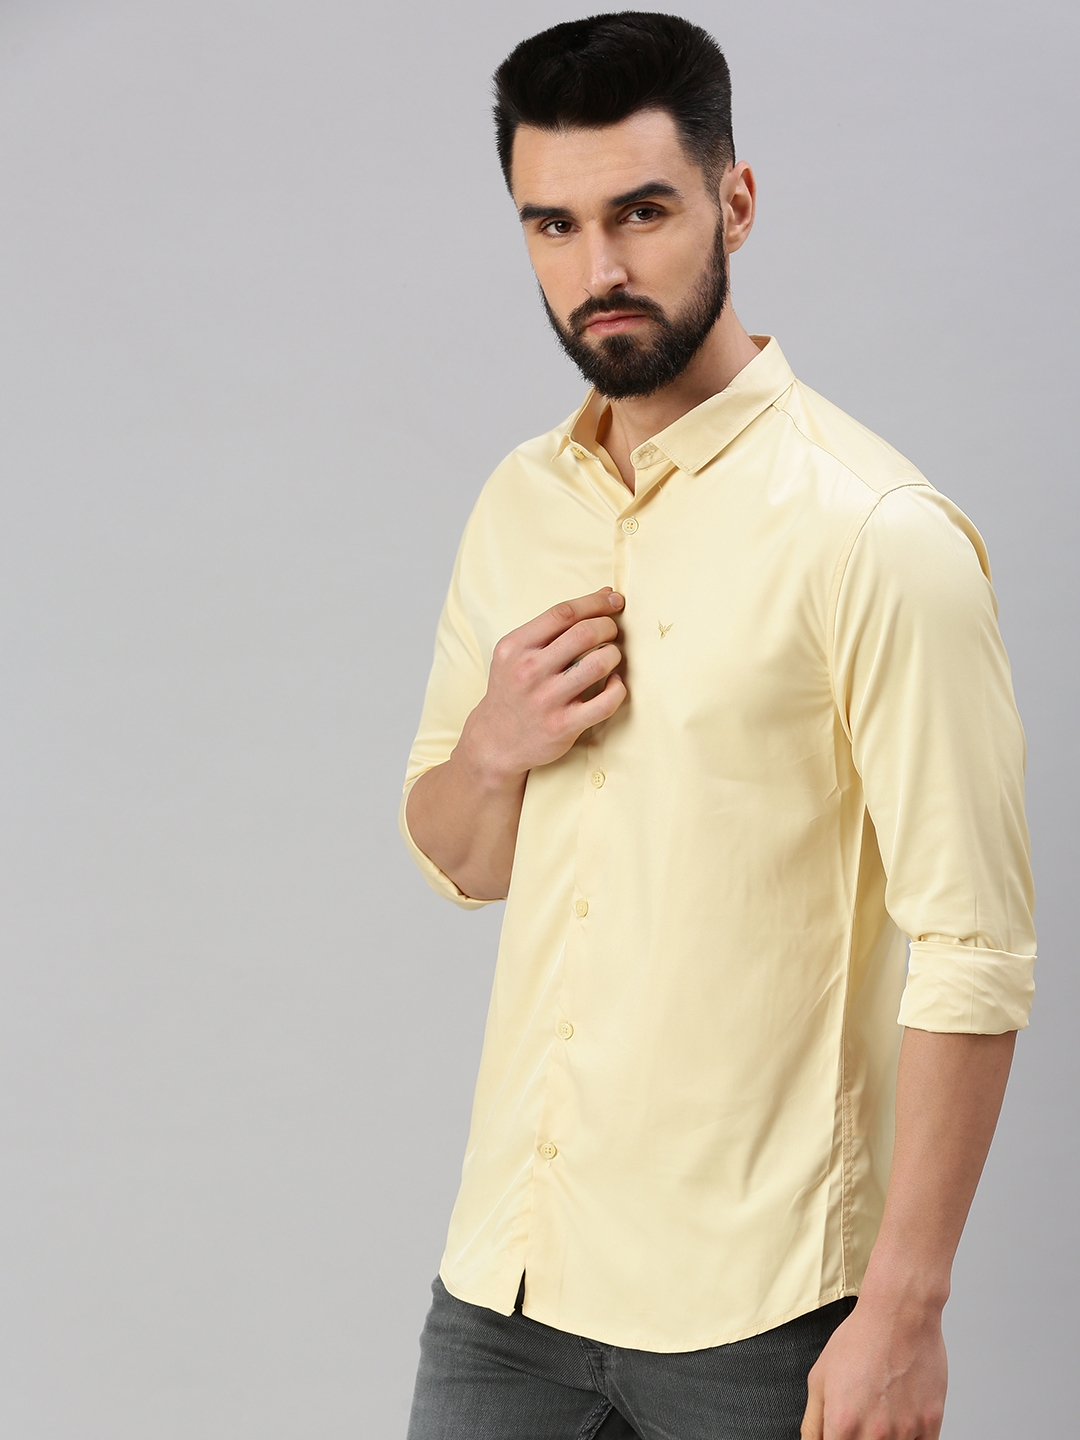 Men's Yellow Satin Solid Casual Shirts